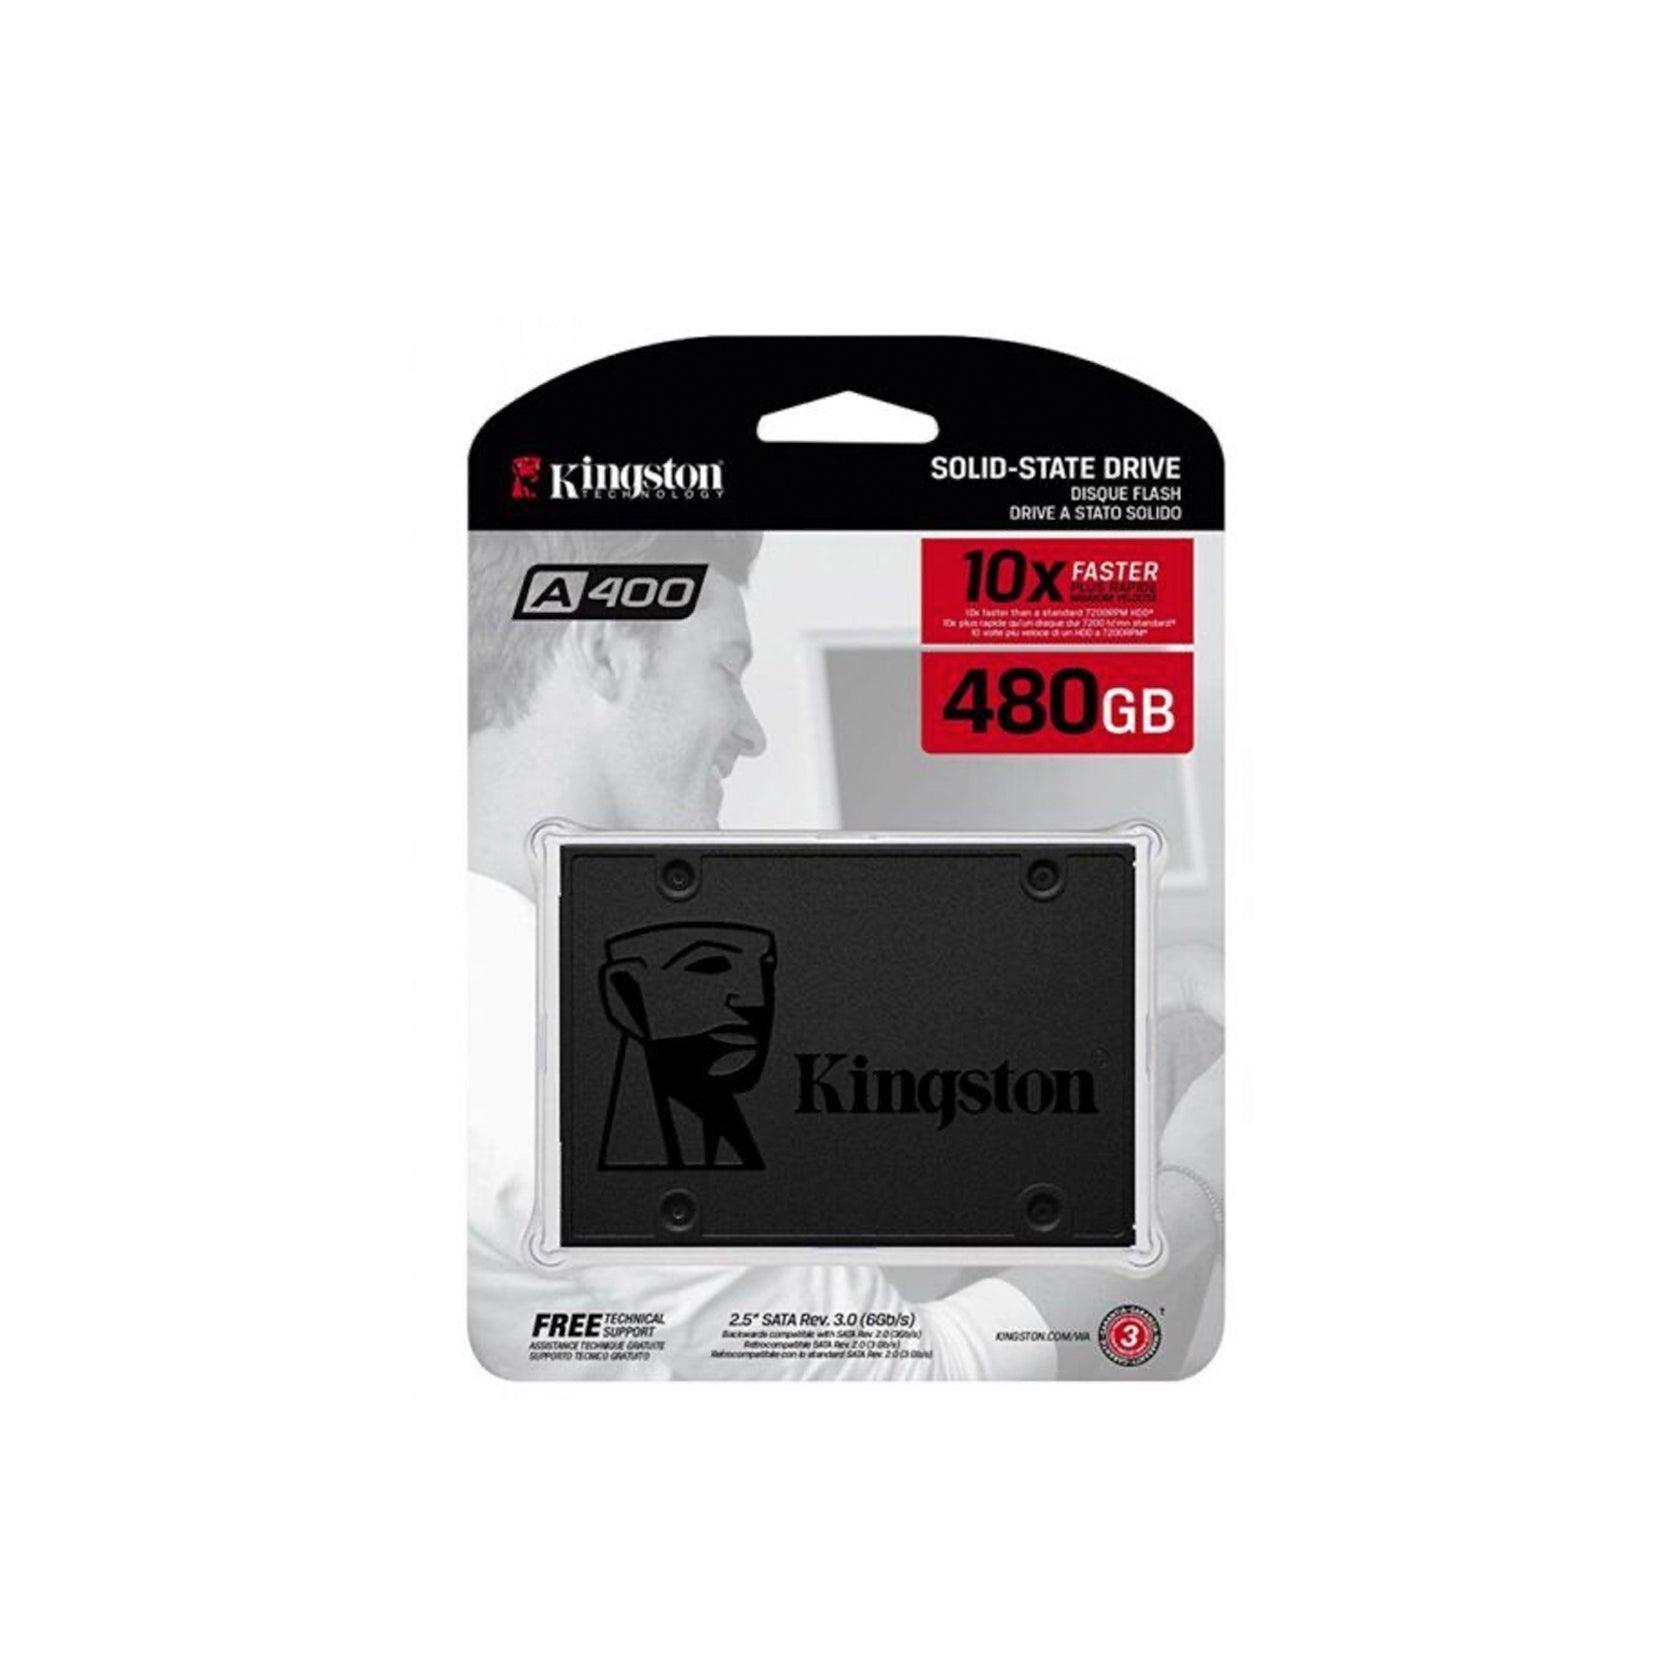 KINGSTON SSD 480GB - Kosmos Renew